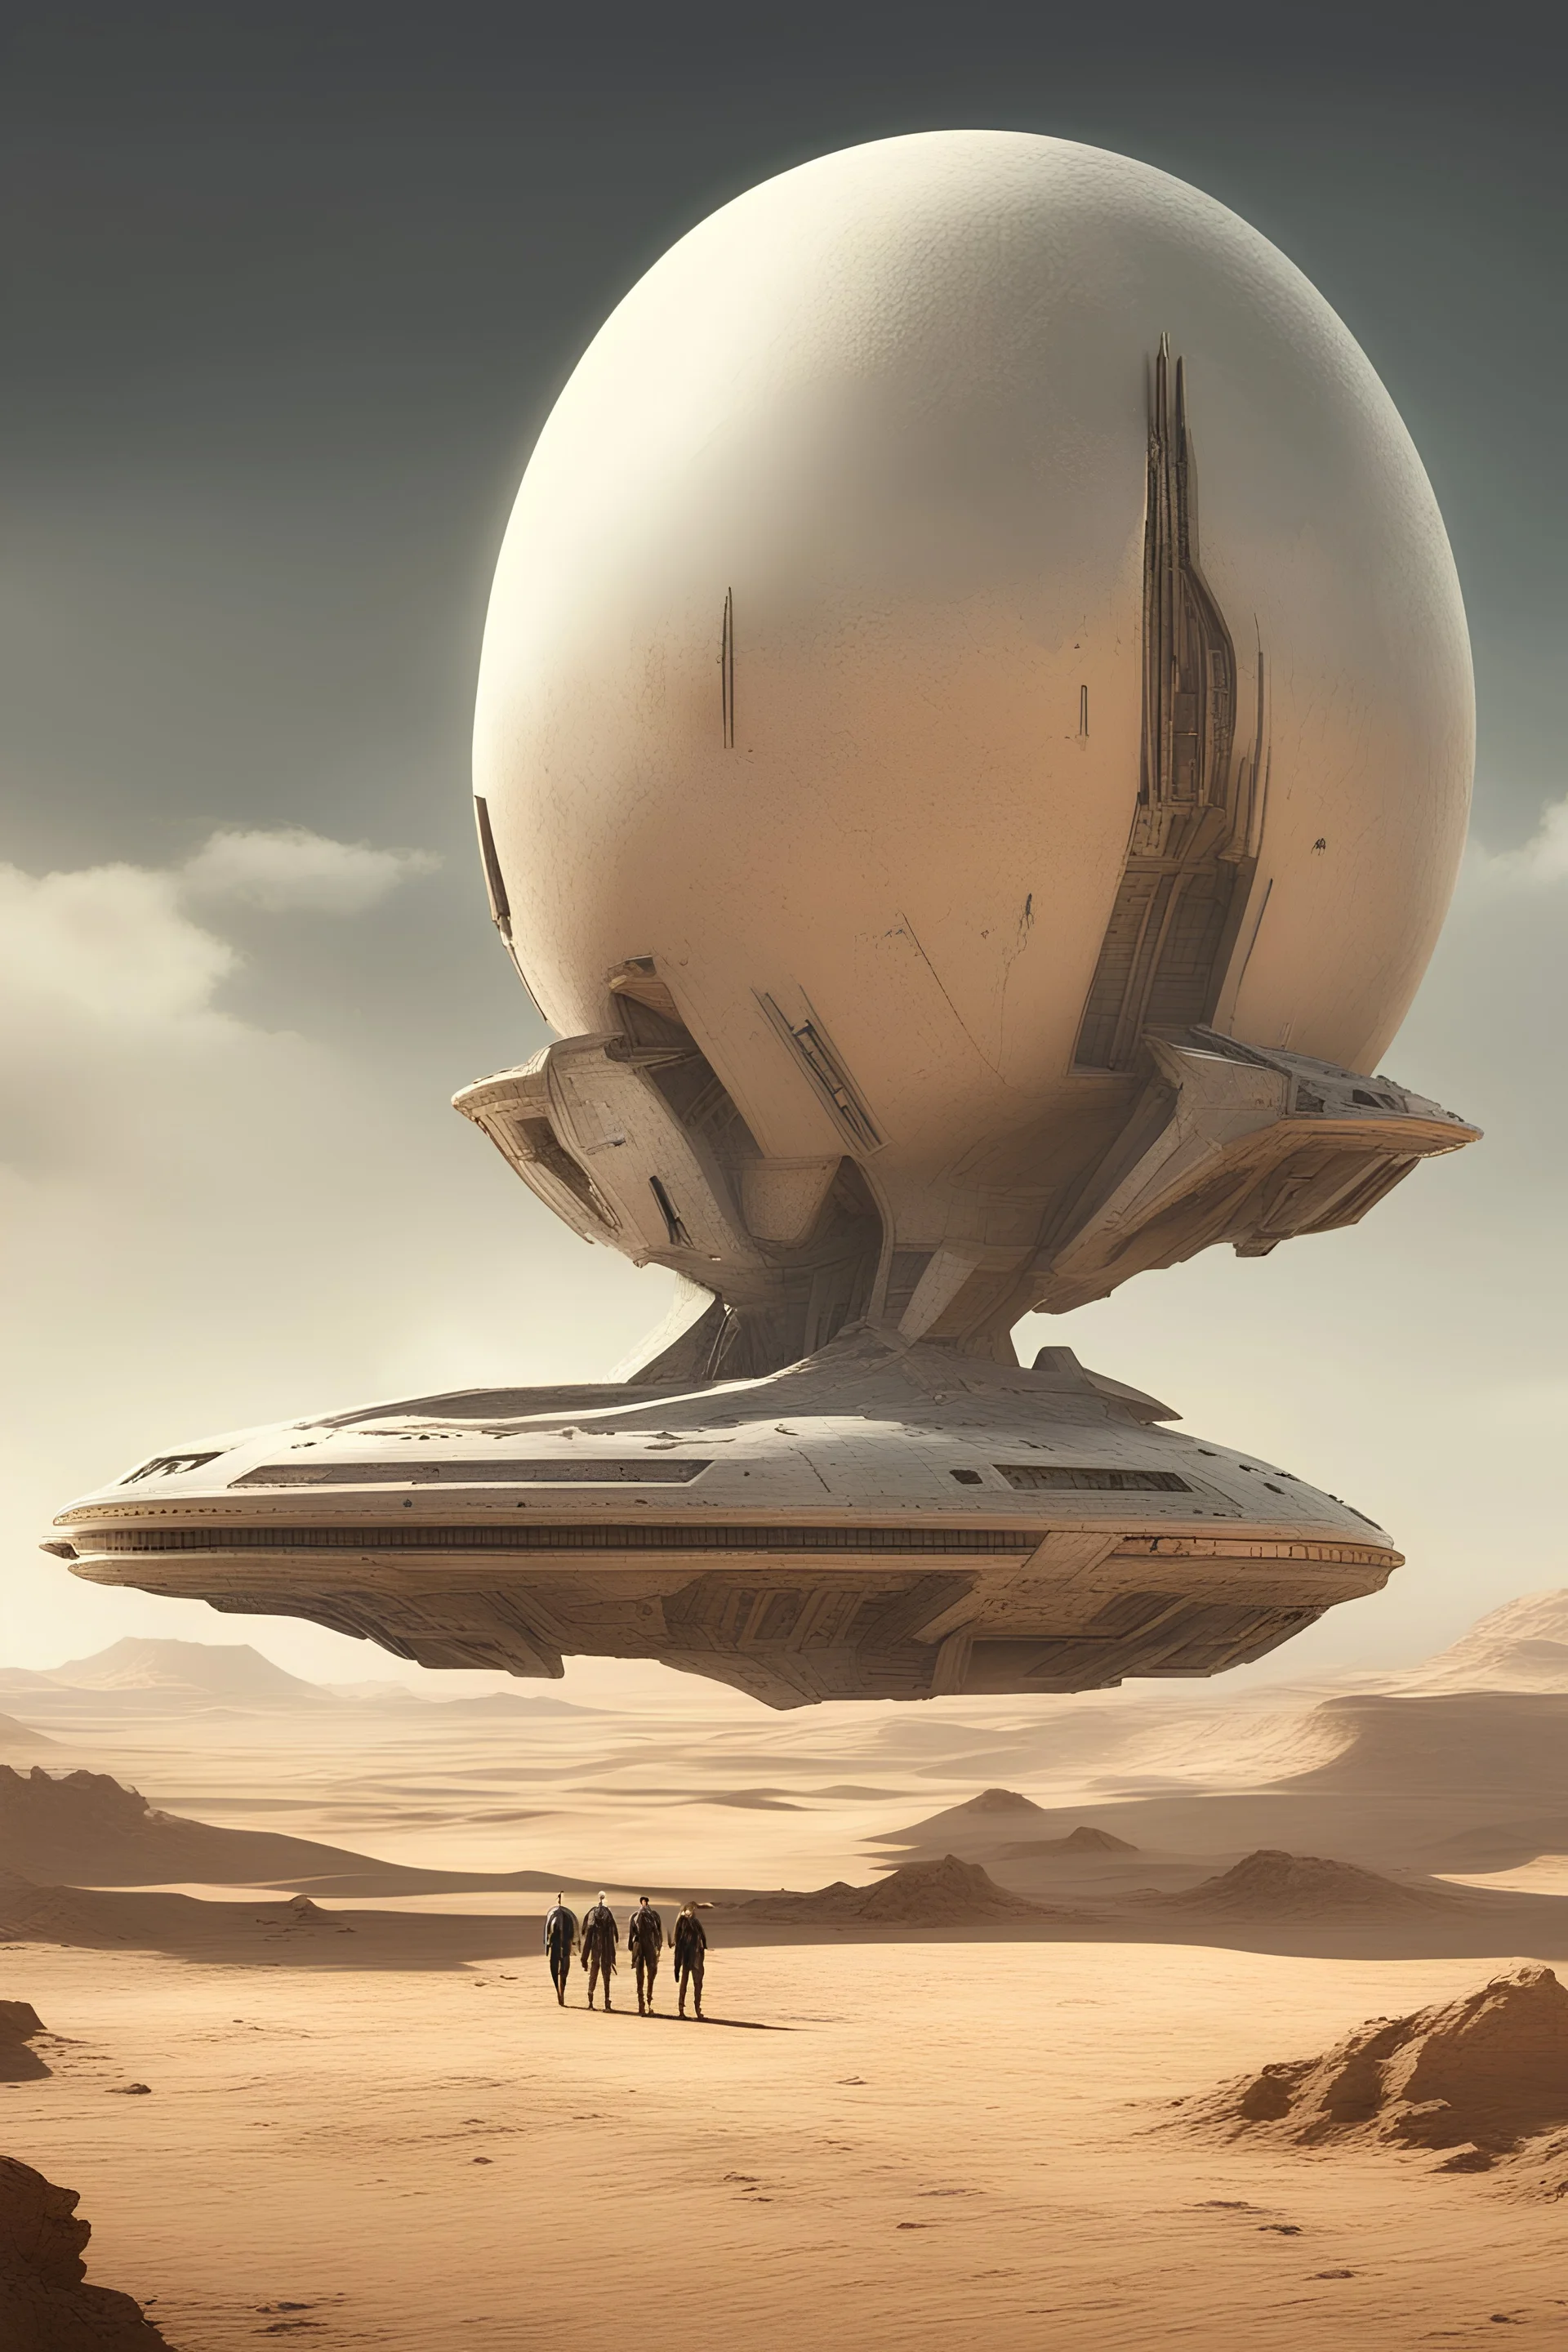 A sleek Spaceship landing in a ruined alien desert city